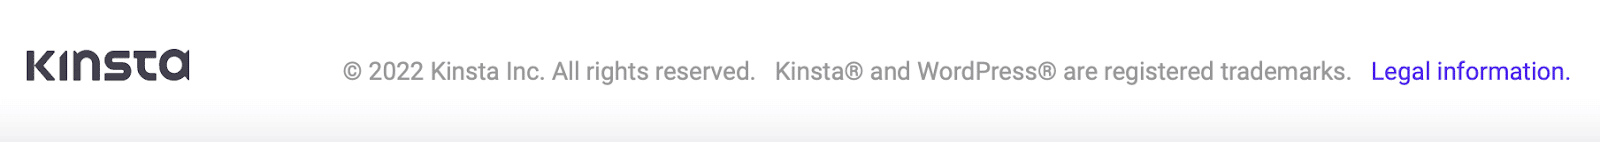 Kinstaの著作権表示